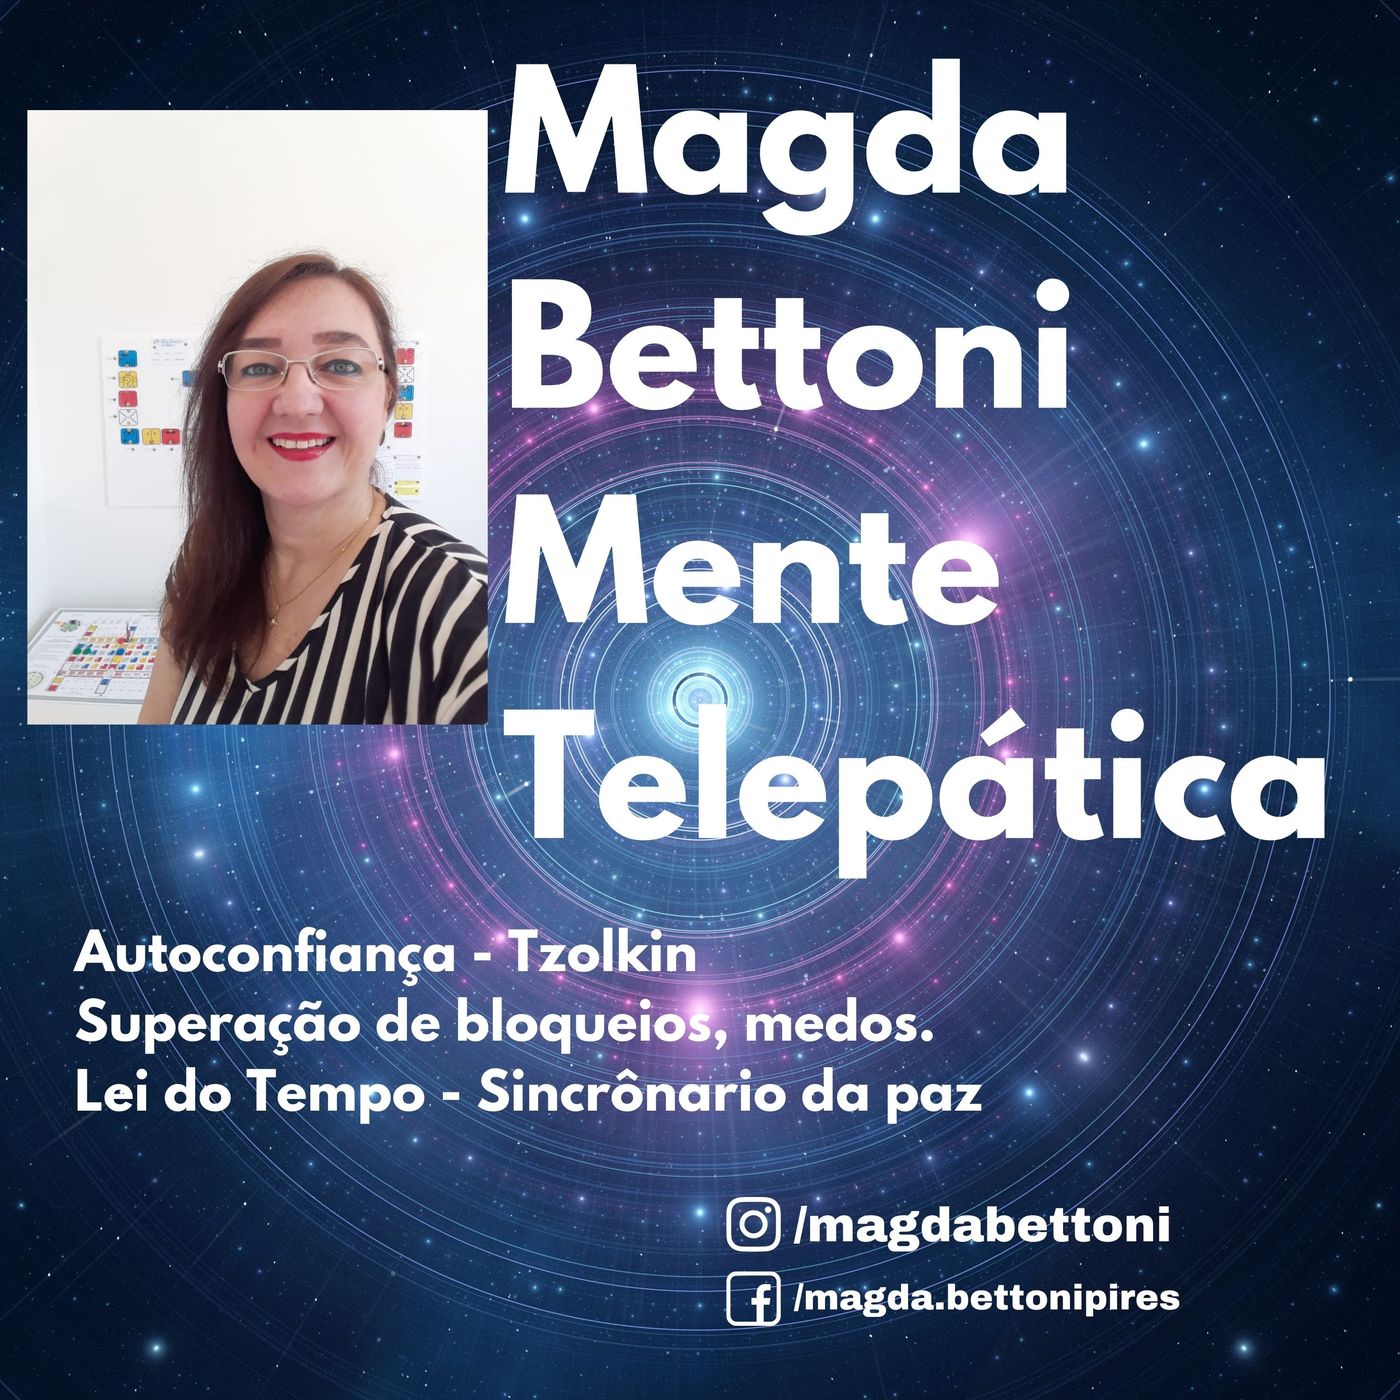 Magda Bettoni - Mente Telepática